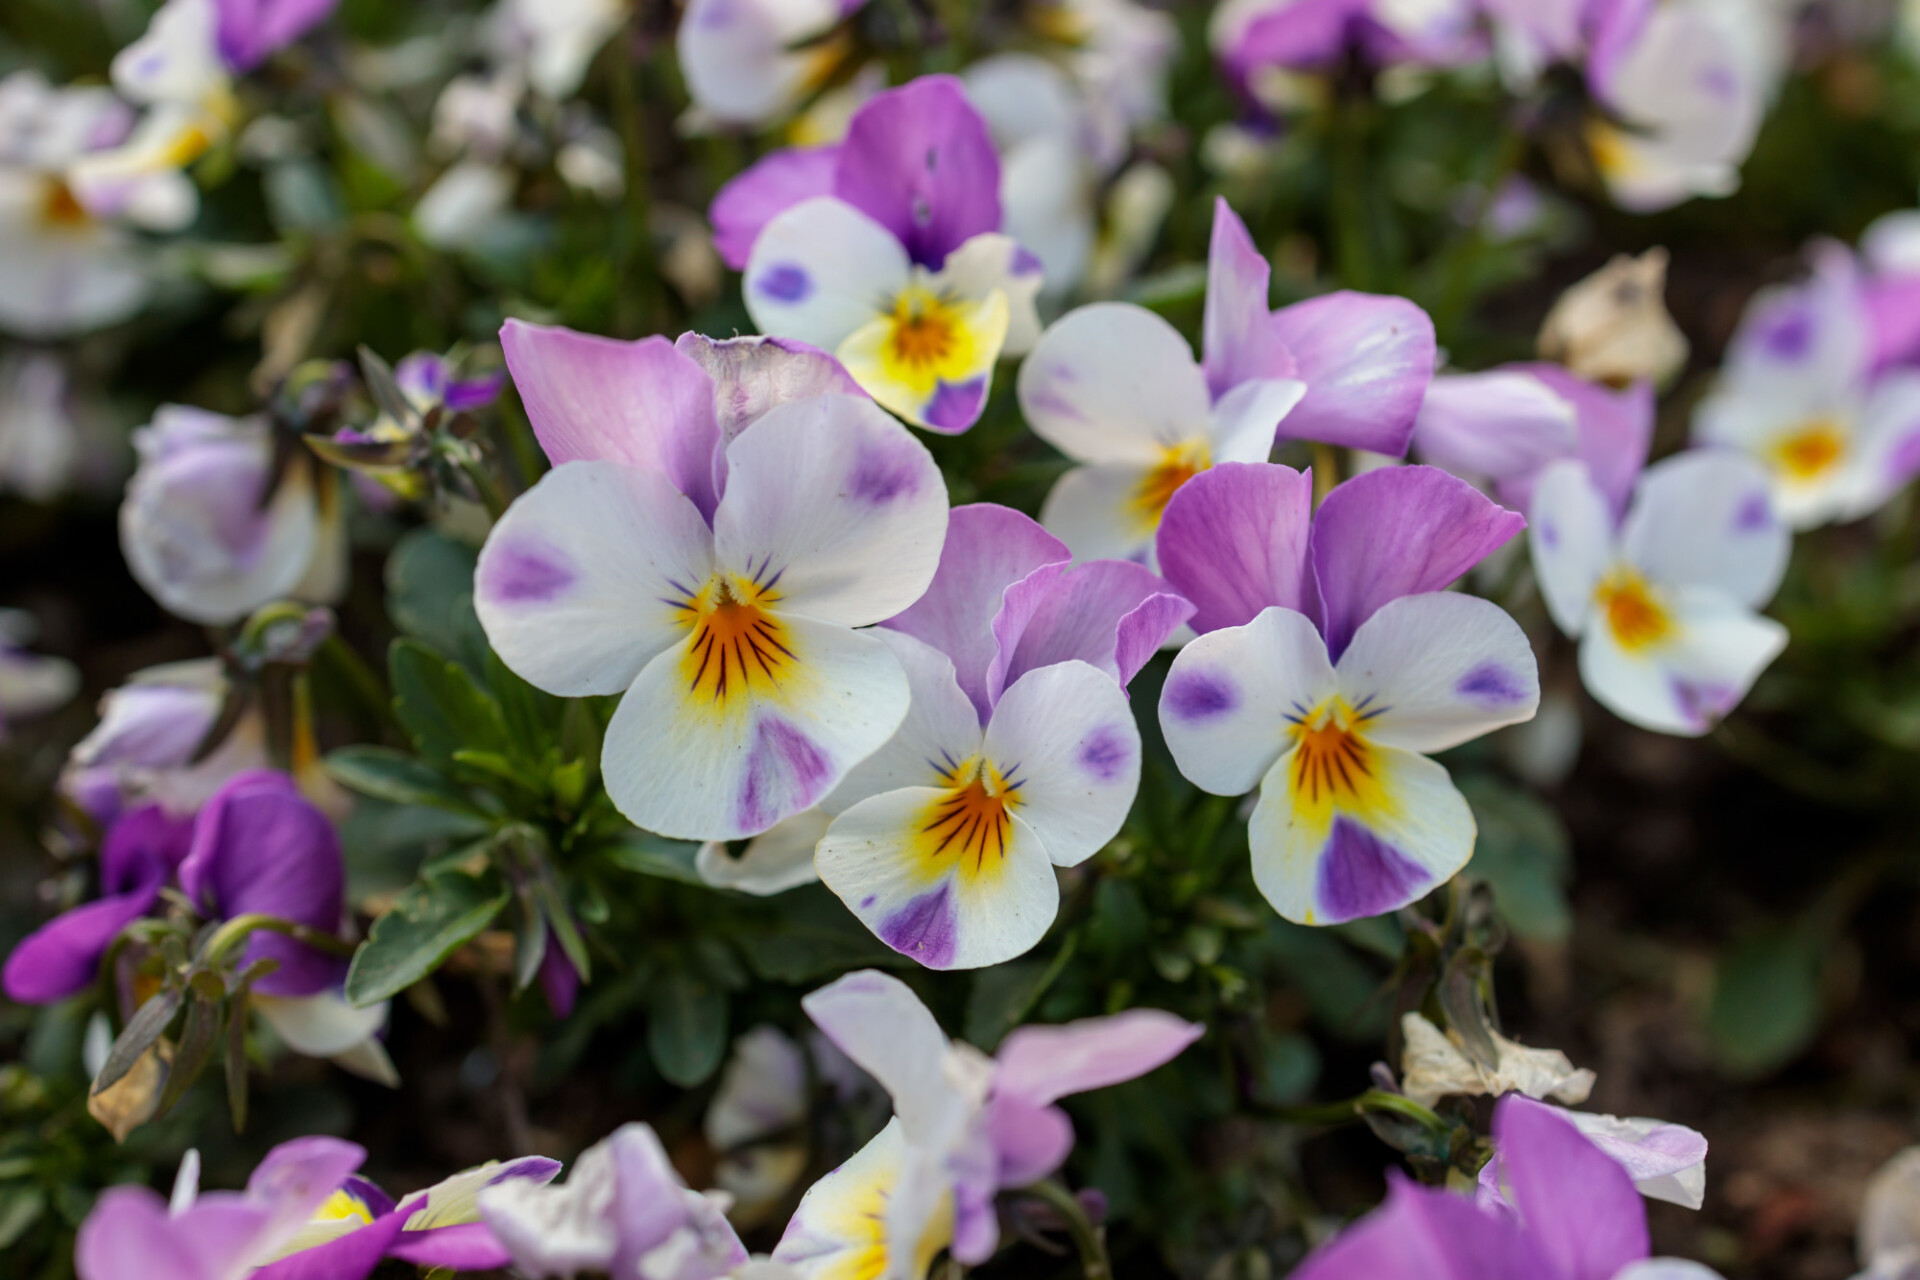 White yellow and pinkish viola flowers